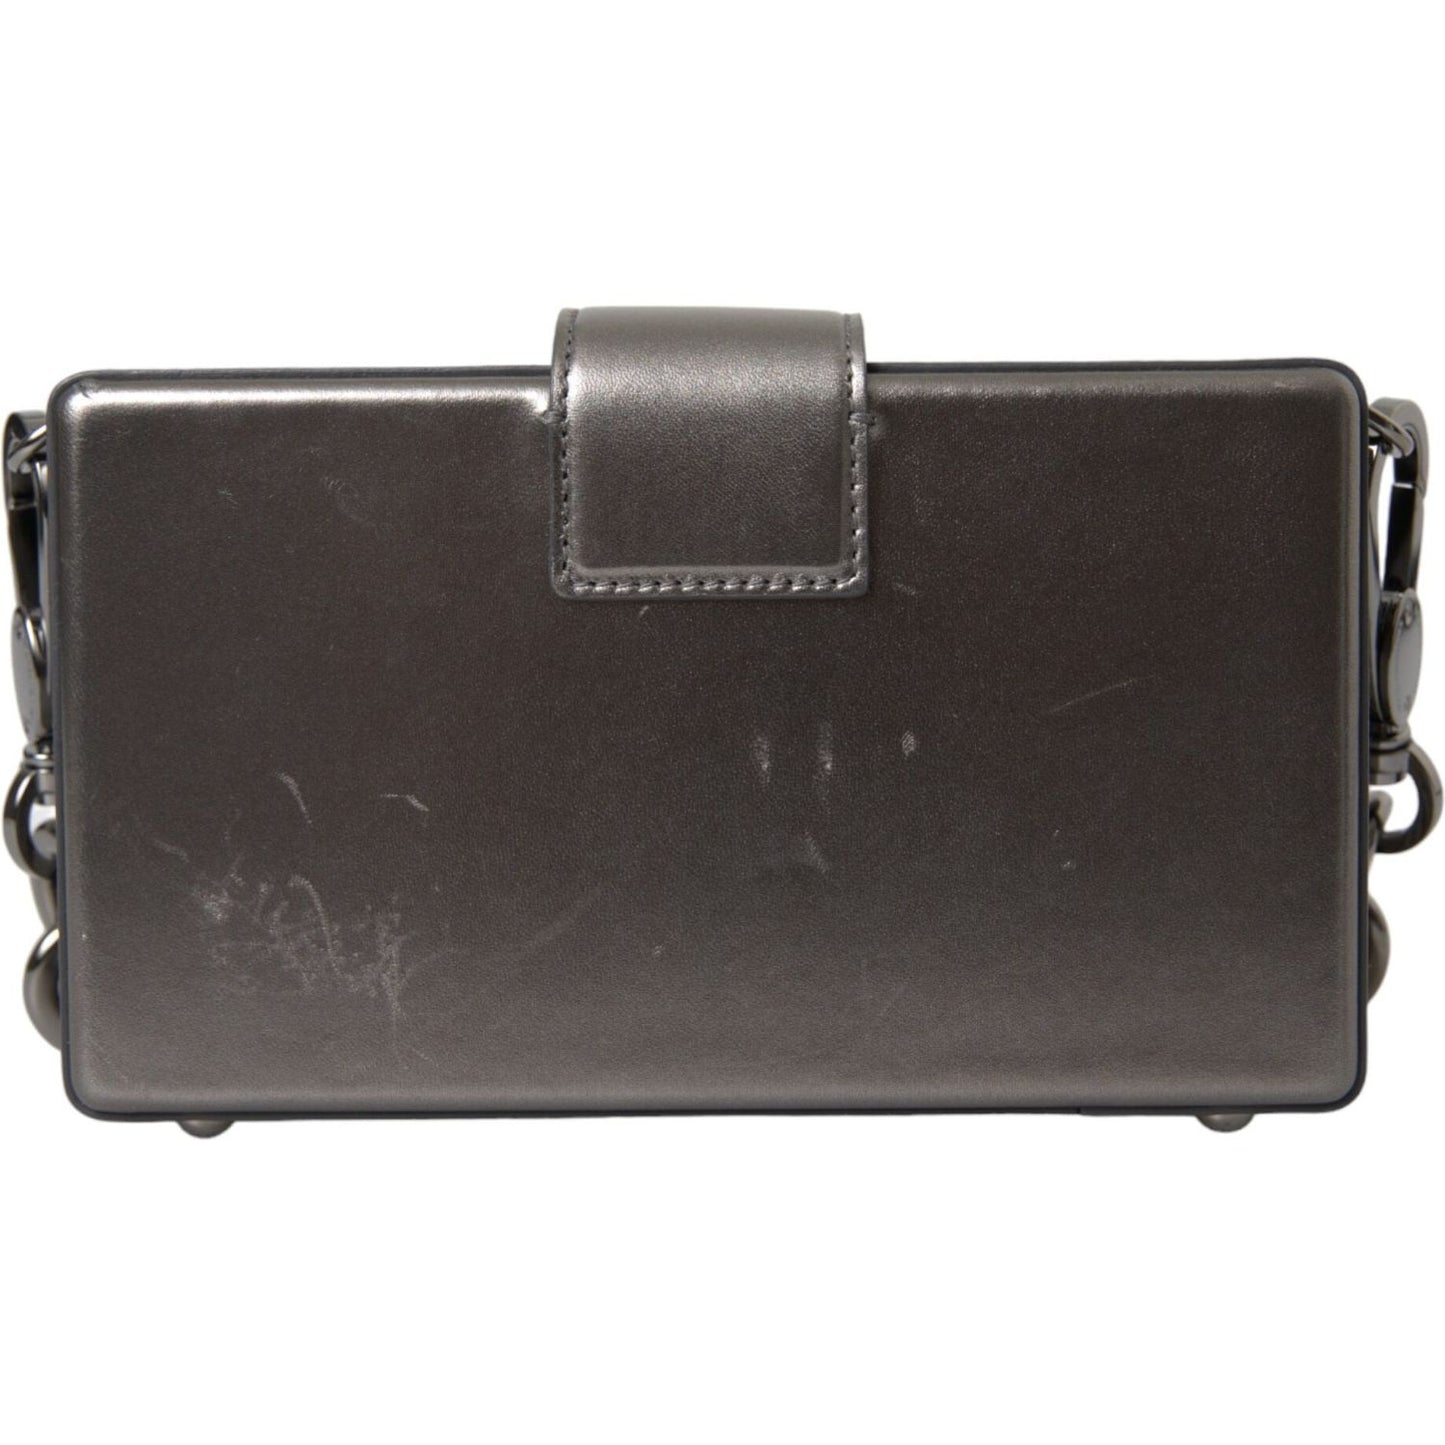 Metallic Gray Calfskin Leather DG BOX Shoulder Bag